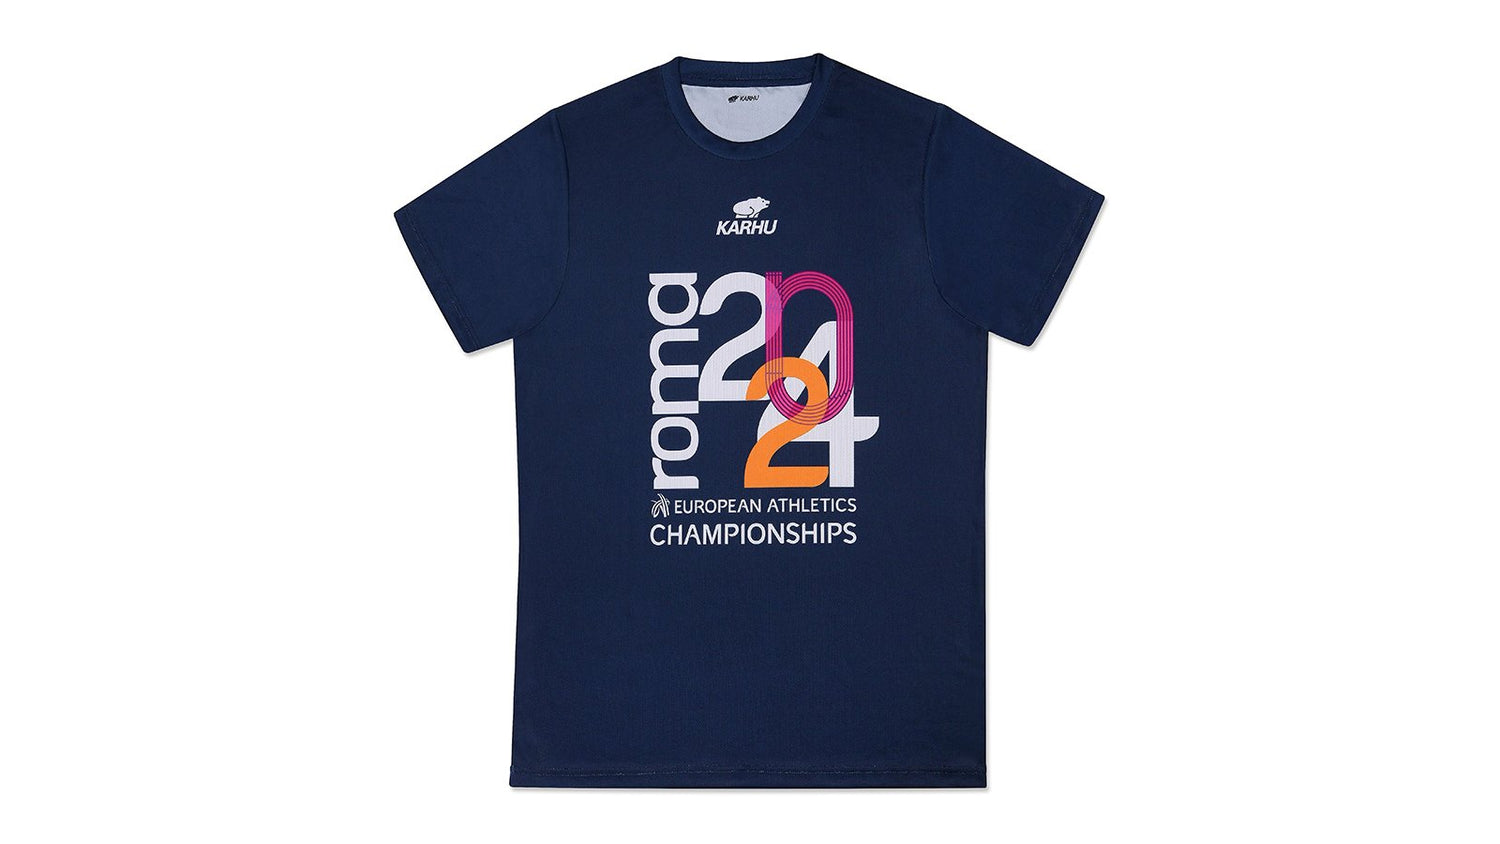 Blue KARHU European Athletics performance t-shirt